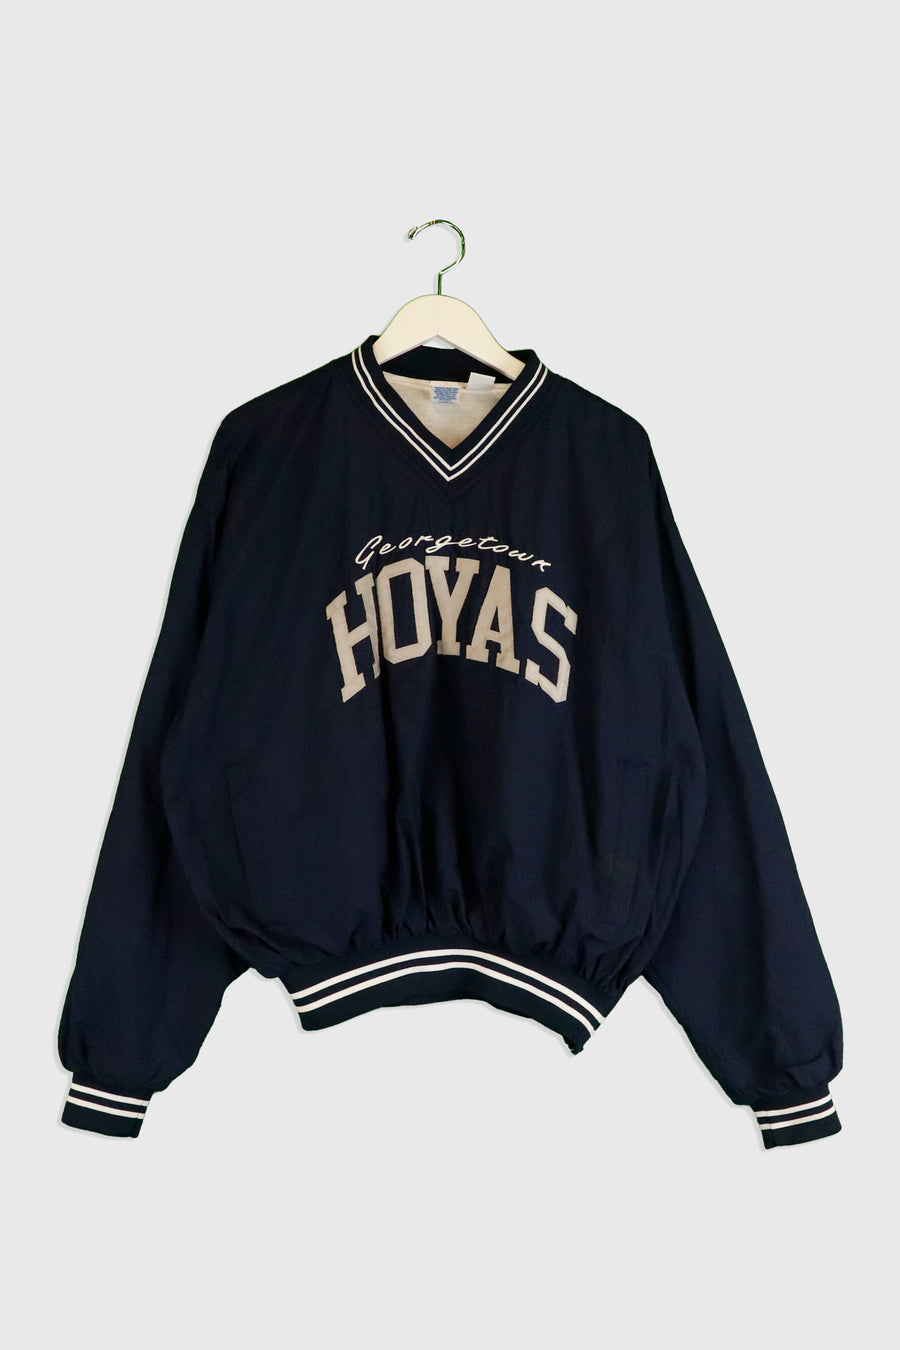 Vintage Geogretown Hoyas Pull Over Warm Up Jacket Sz M